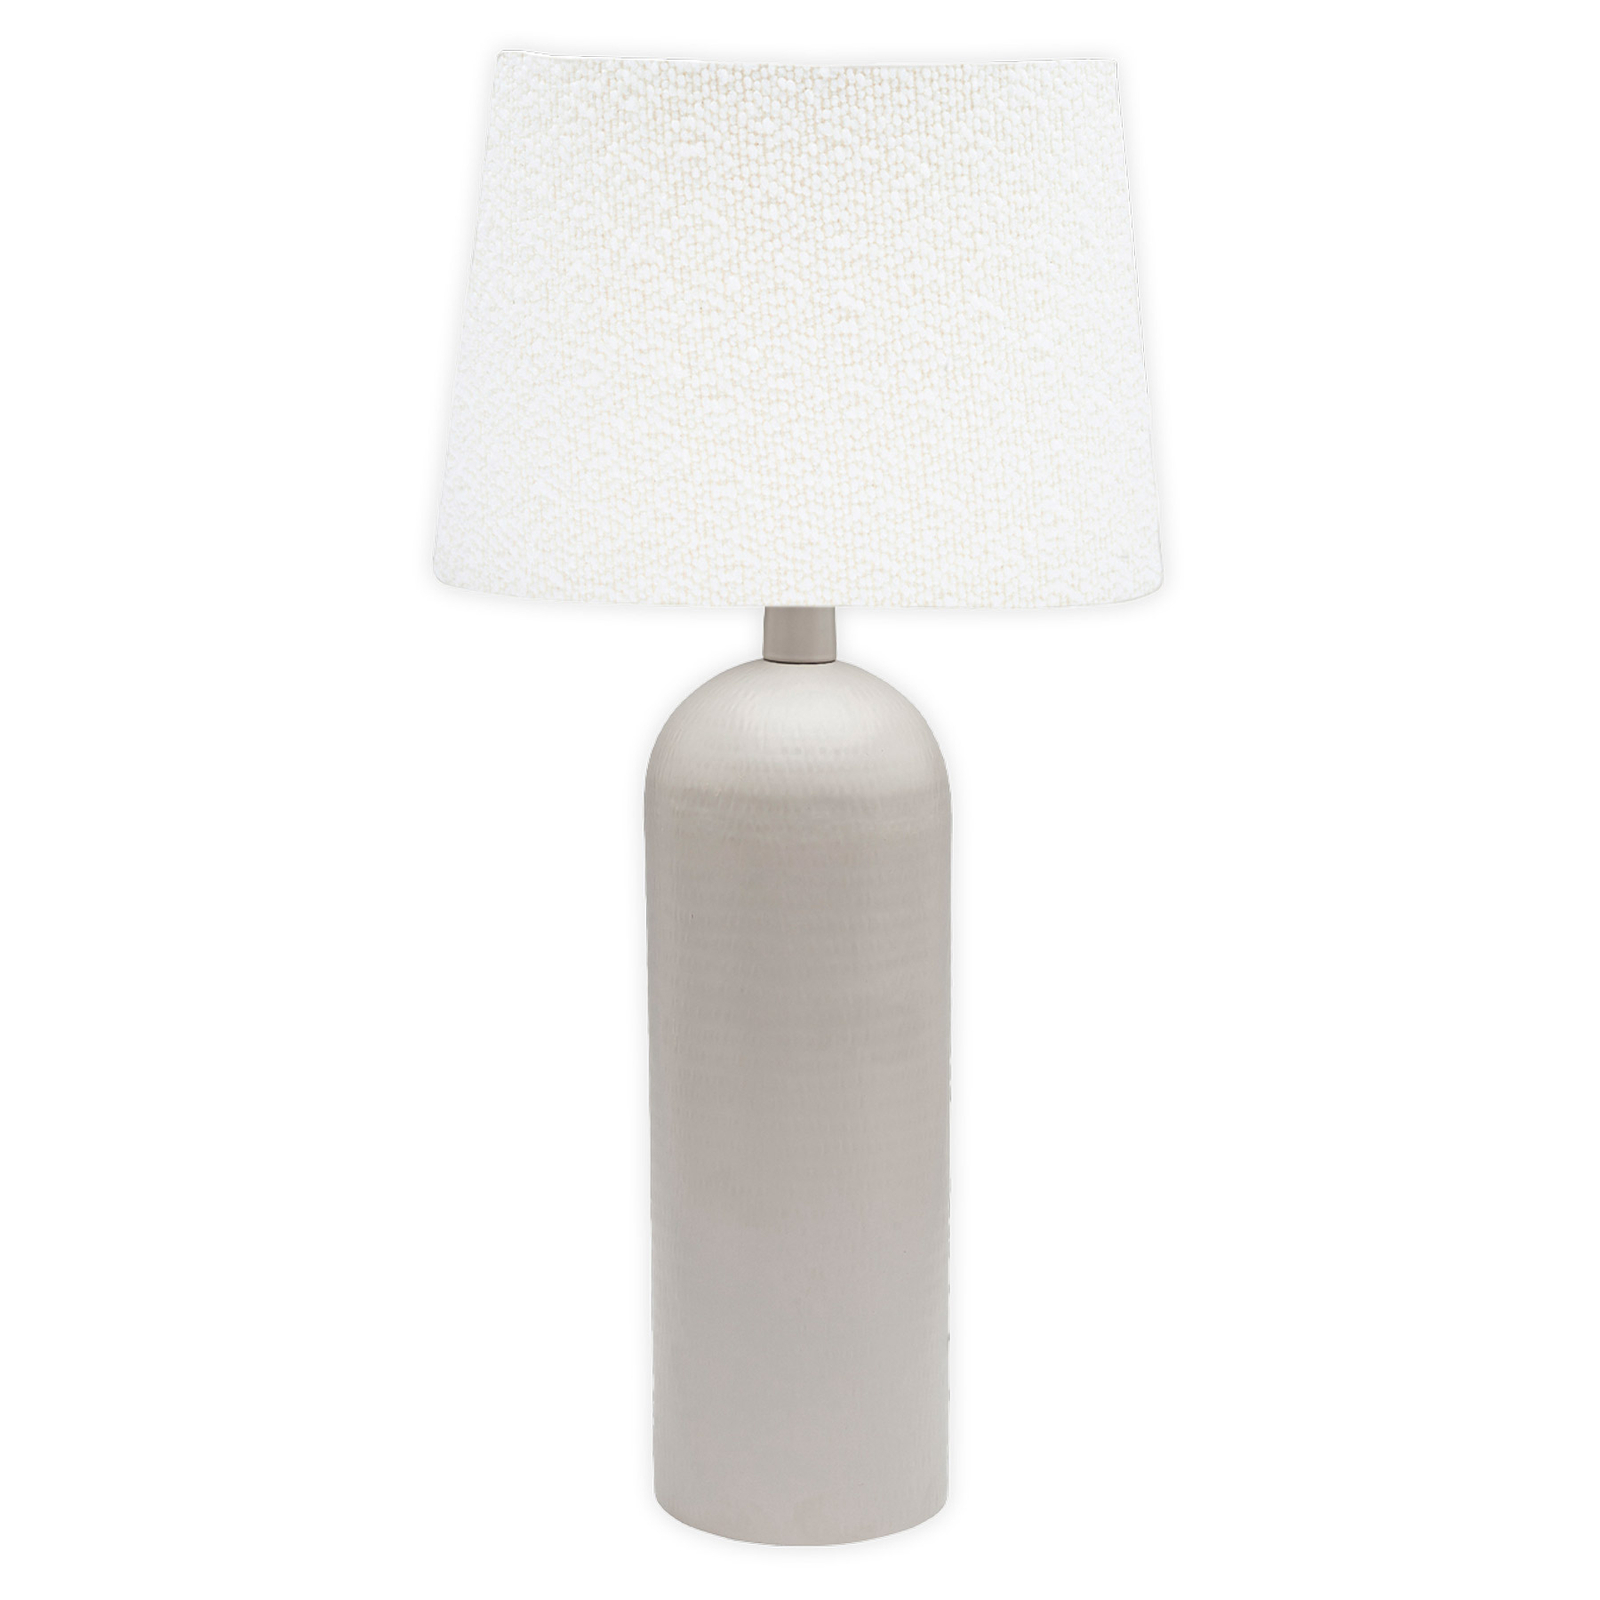 PR Home Riley lampe à poser, blanche/beige, H54 cm